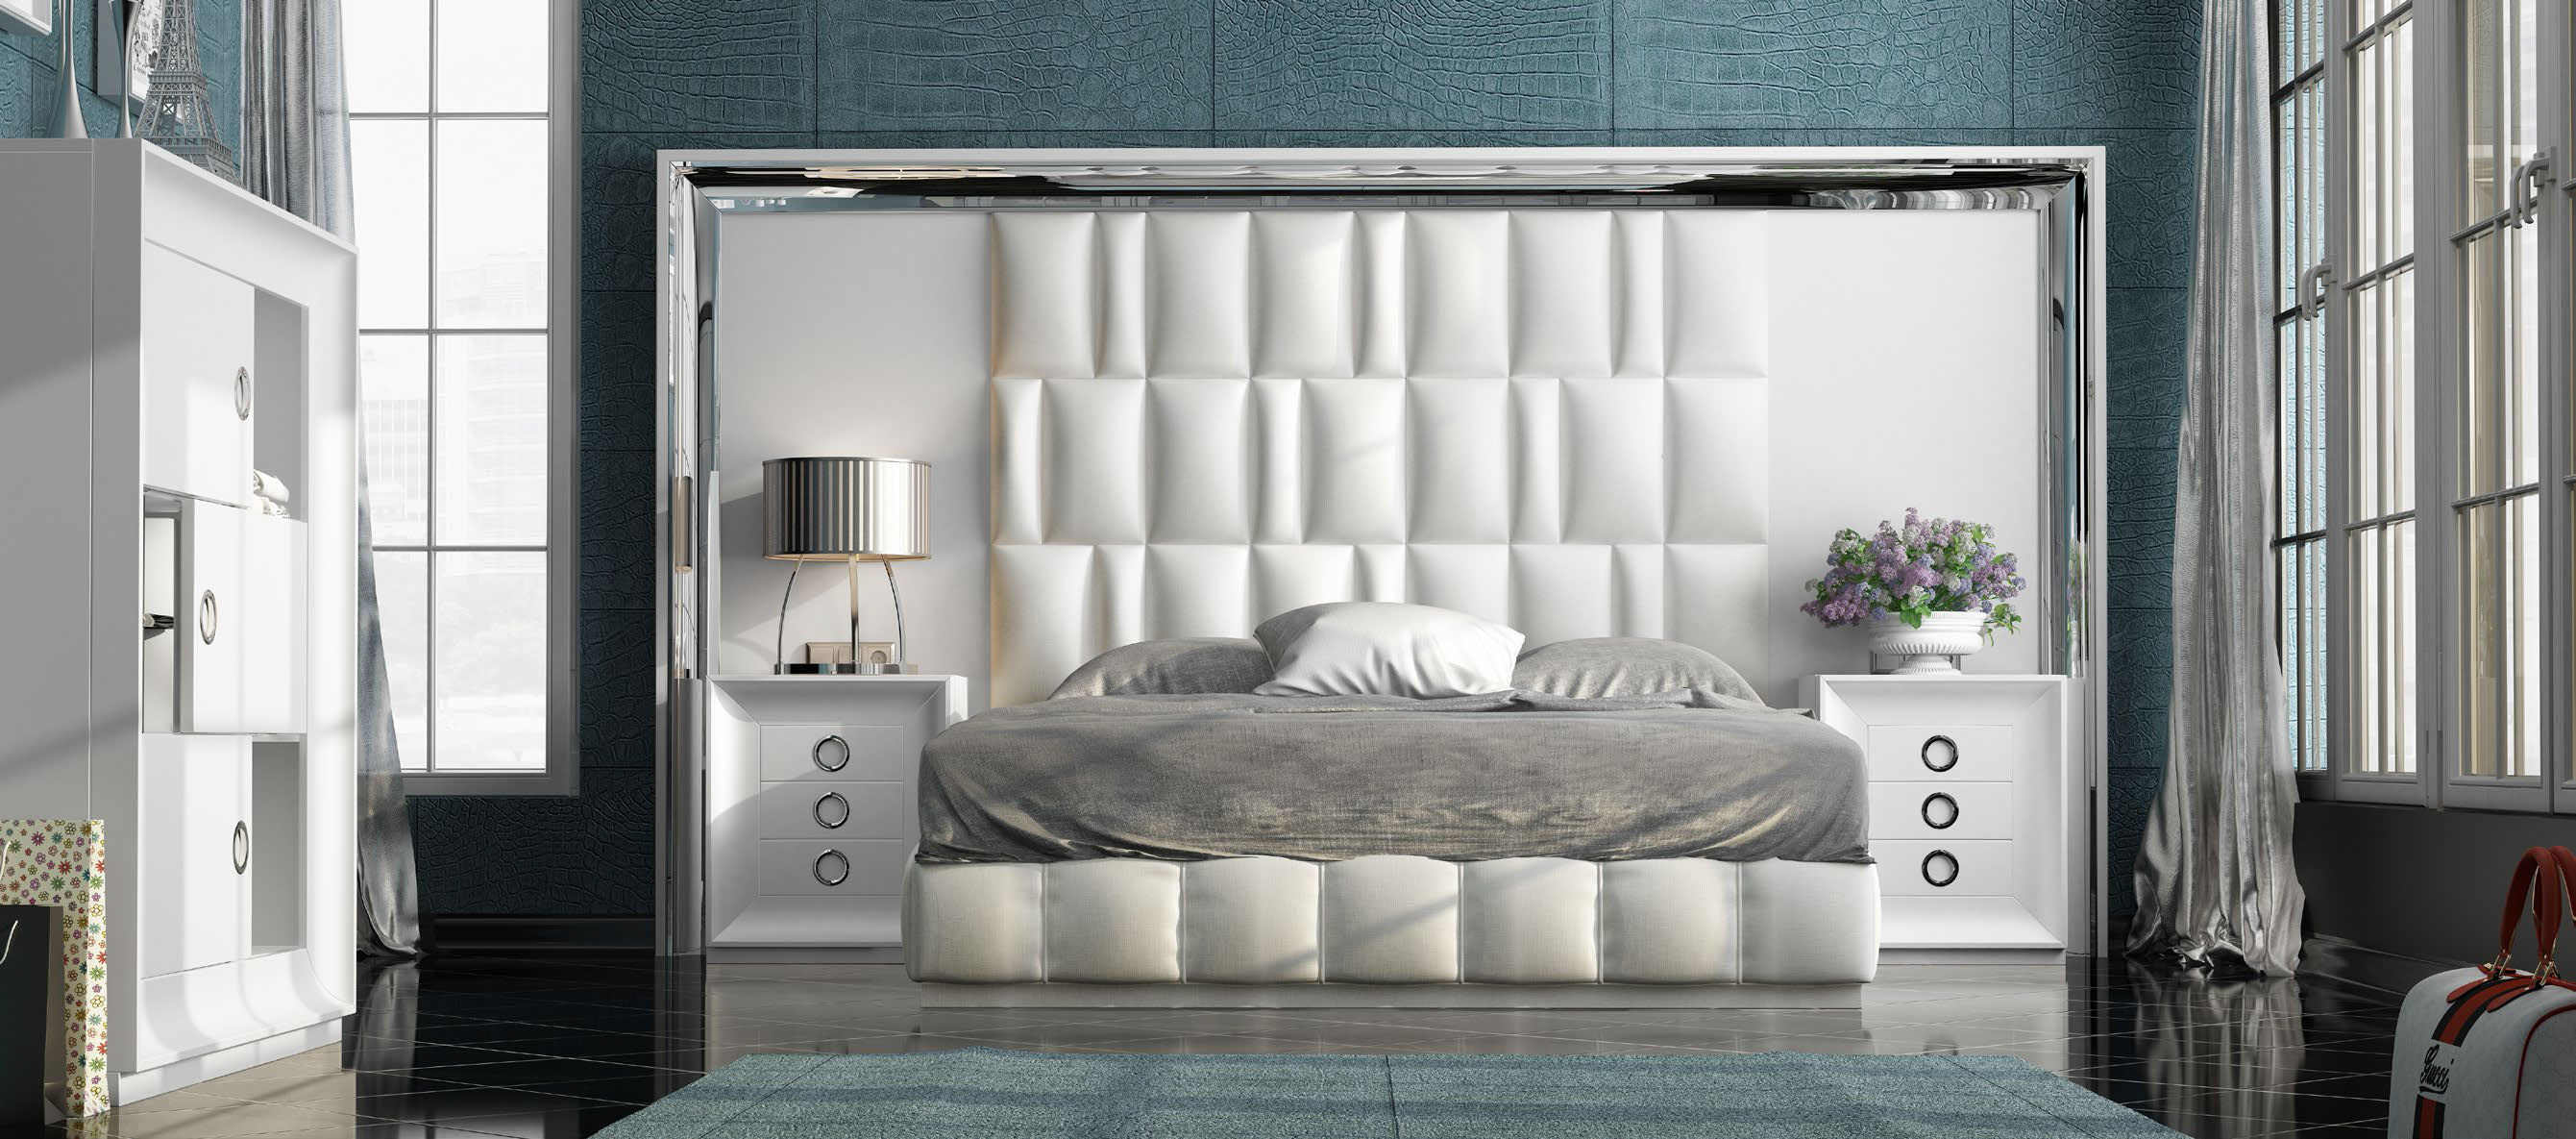 Brands Franco Furniture Bedrooms vol1, Spain DOR 102